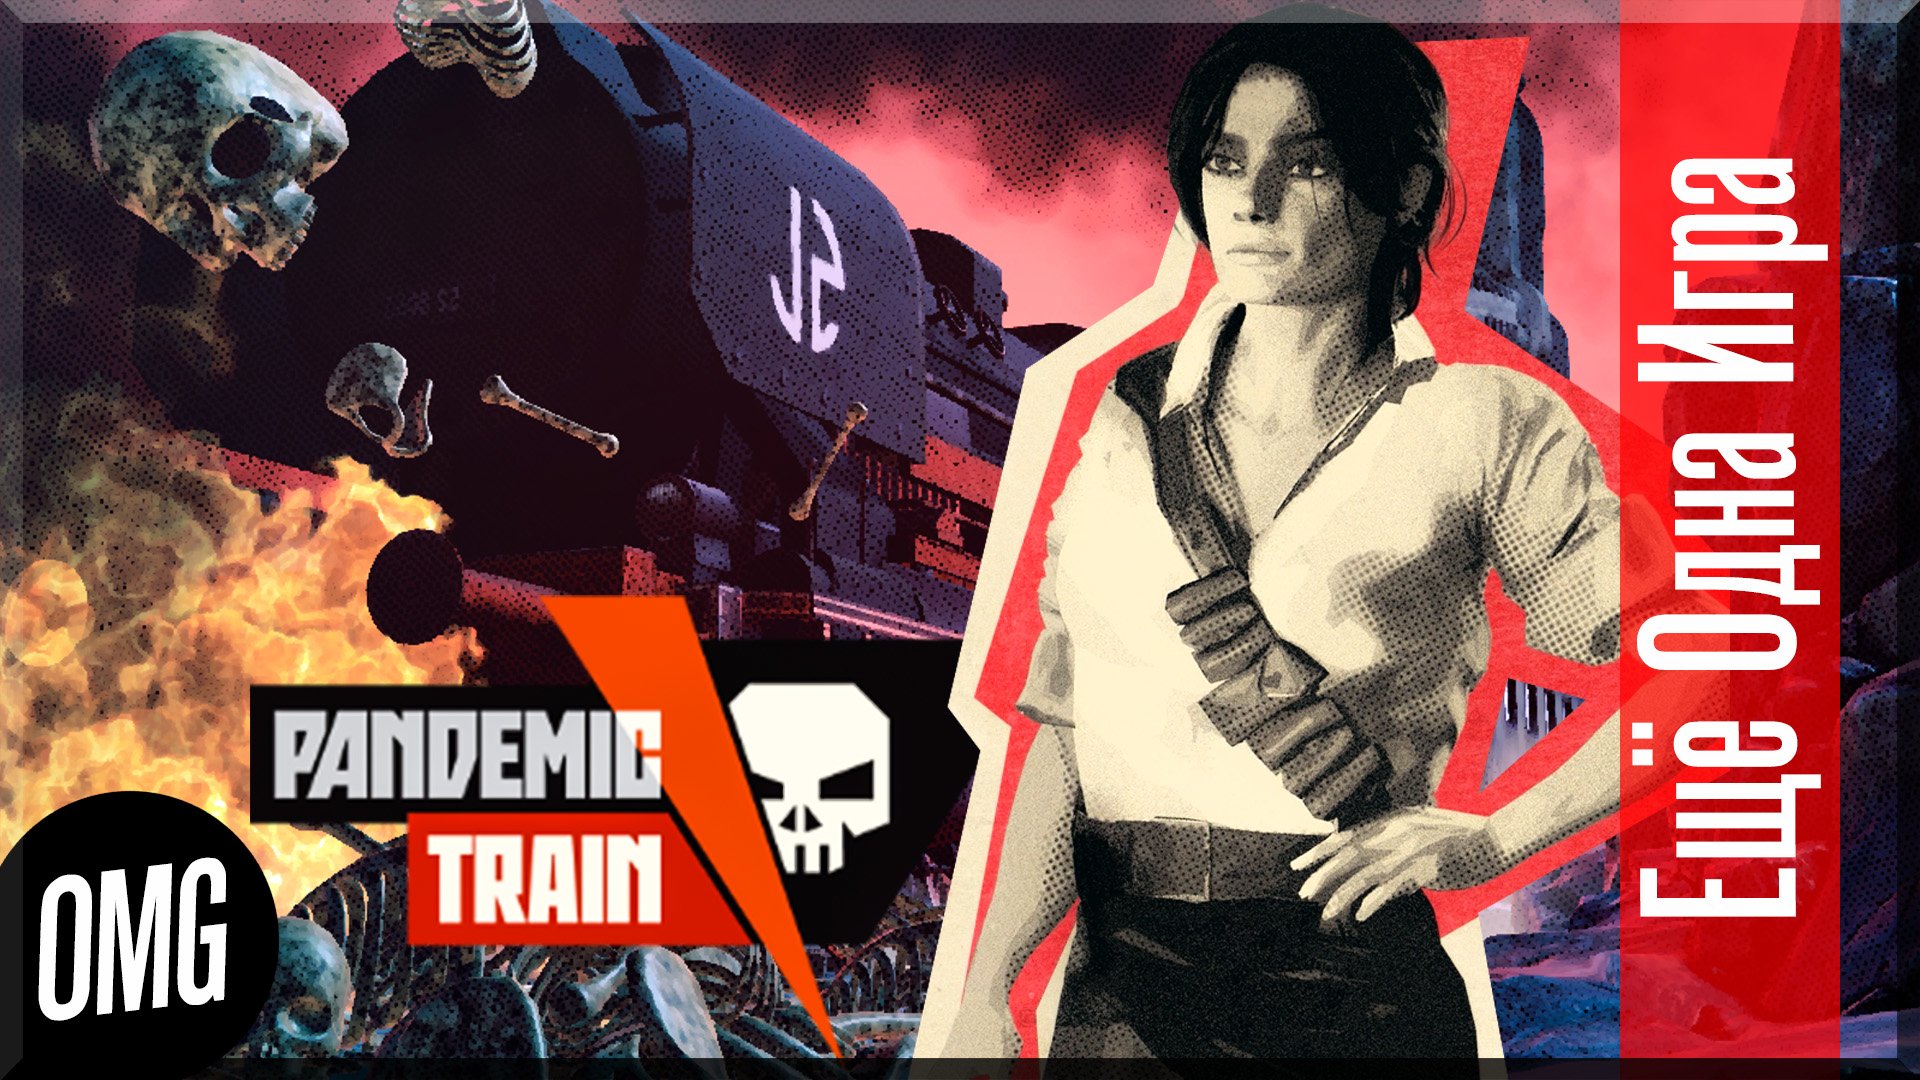 [OMG] Pandemic Train // ПОЕЗД КОНЦА СВЕТА // Еще Одна Игра